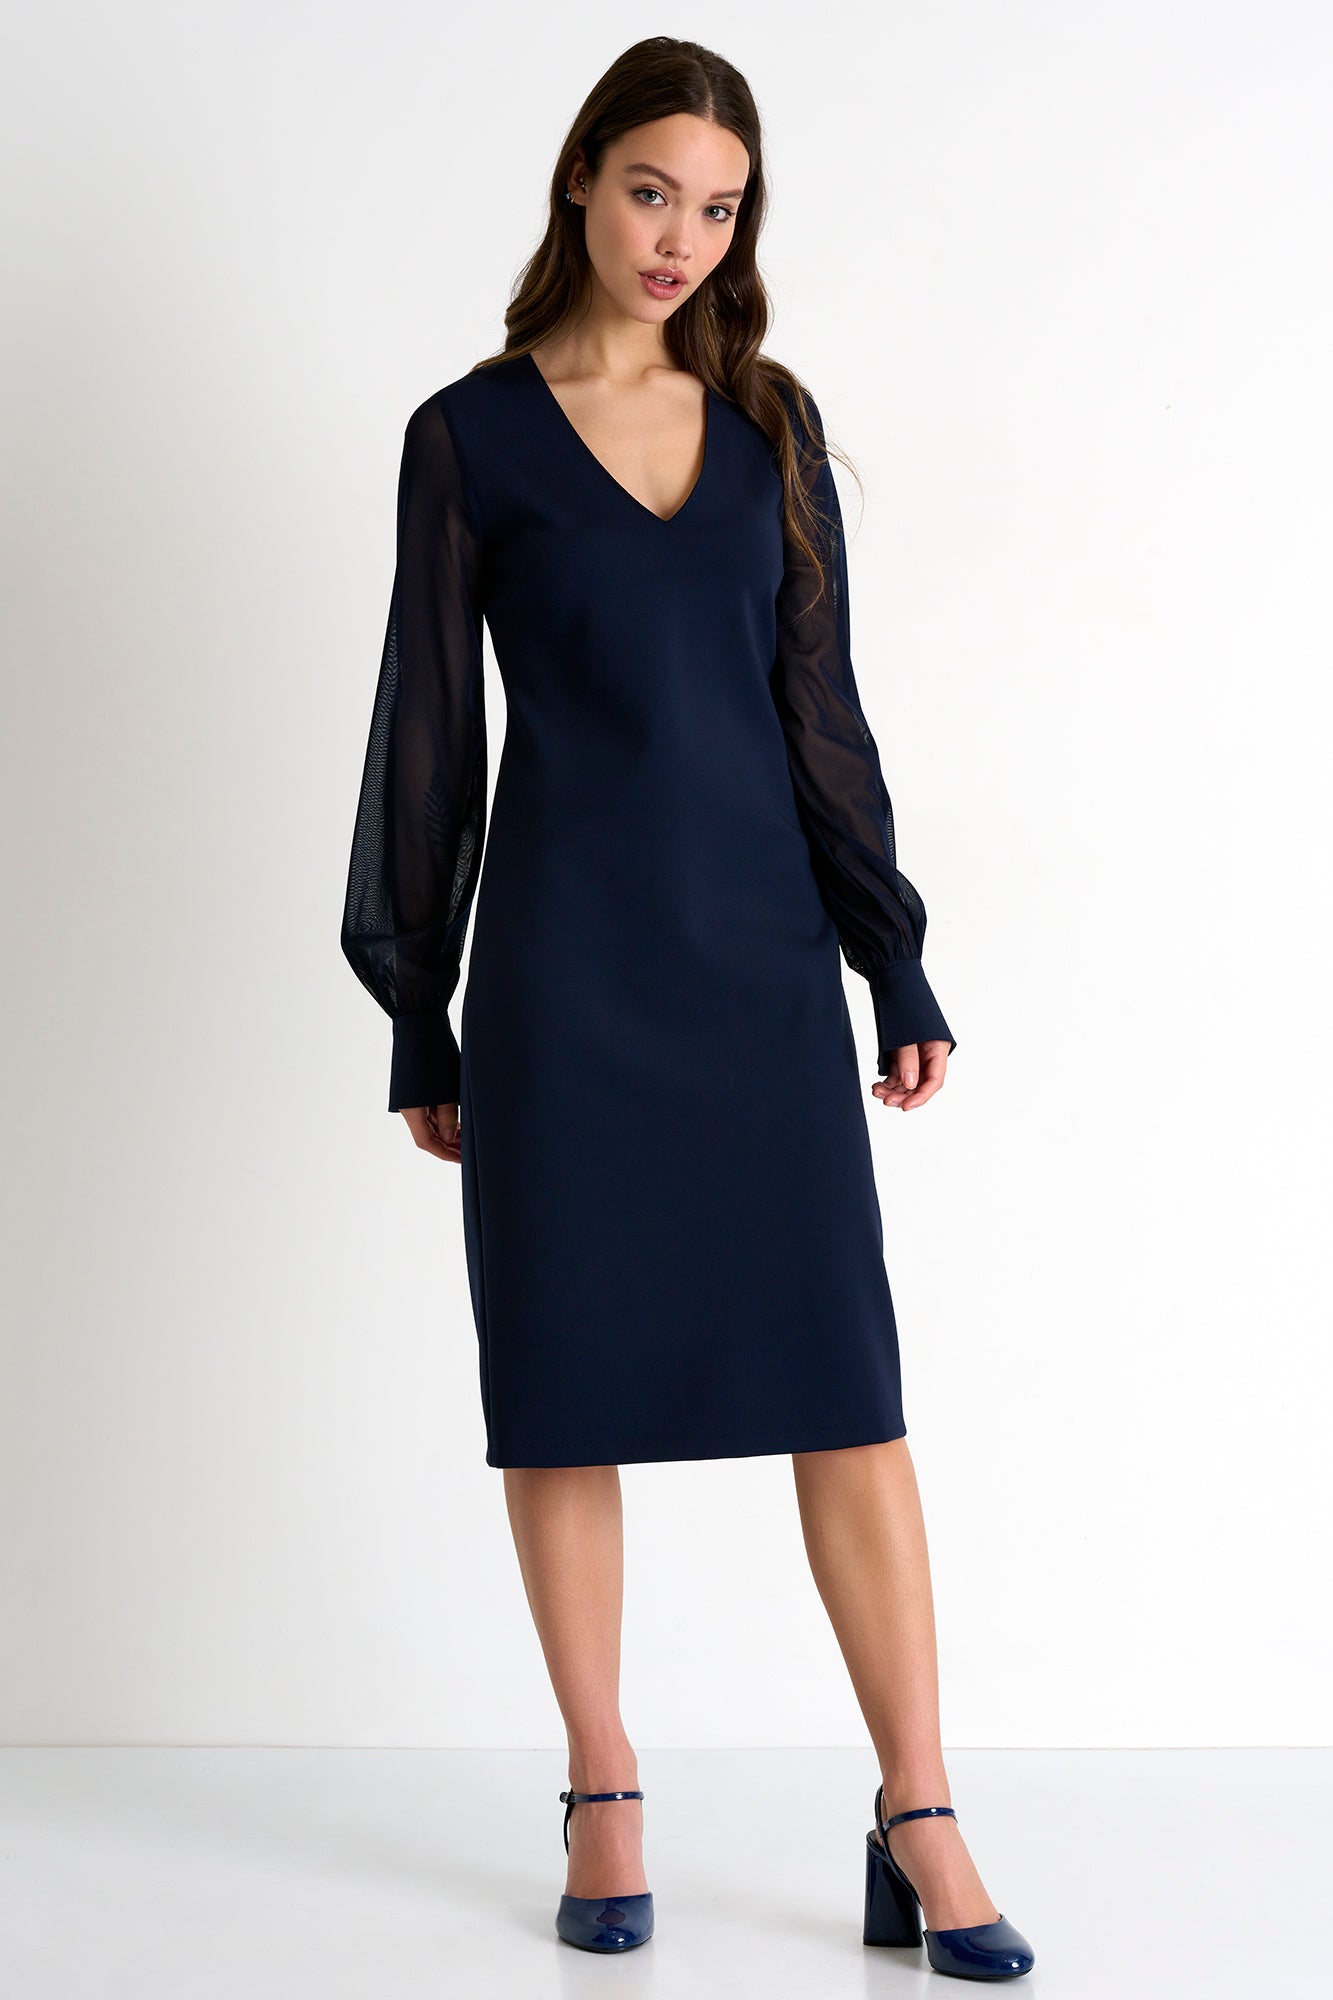 Sheer Sleeve Elegant Dress - 52367-75-550 02 / 550 Navy / 75% POLYAMIDE, 25% ELASTANE